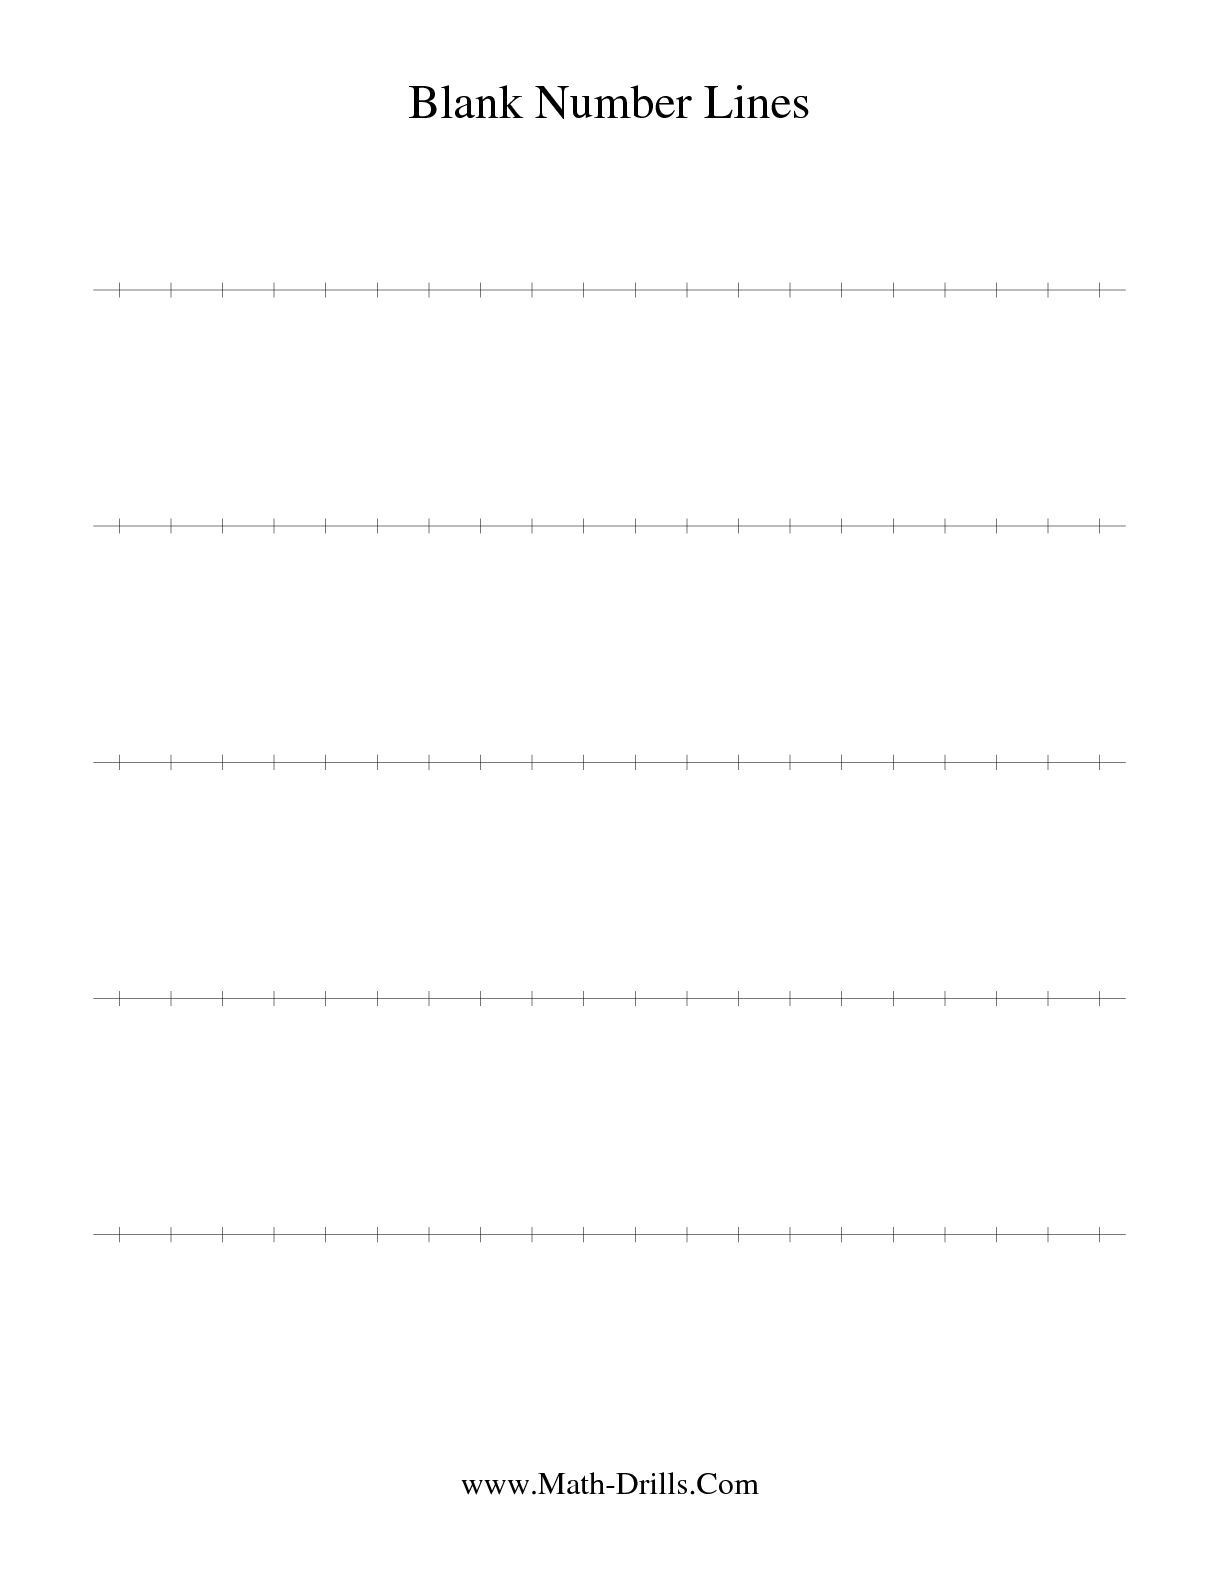 Blank Number Line Worksheet the Blank Number Line Math Worksheet From the Number Sense